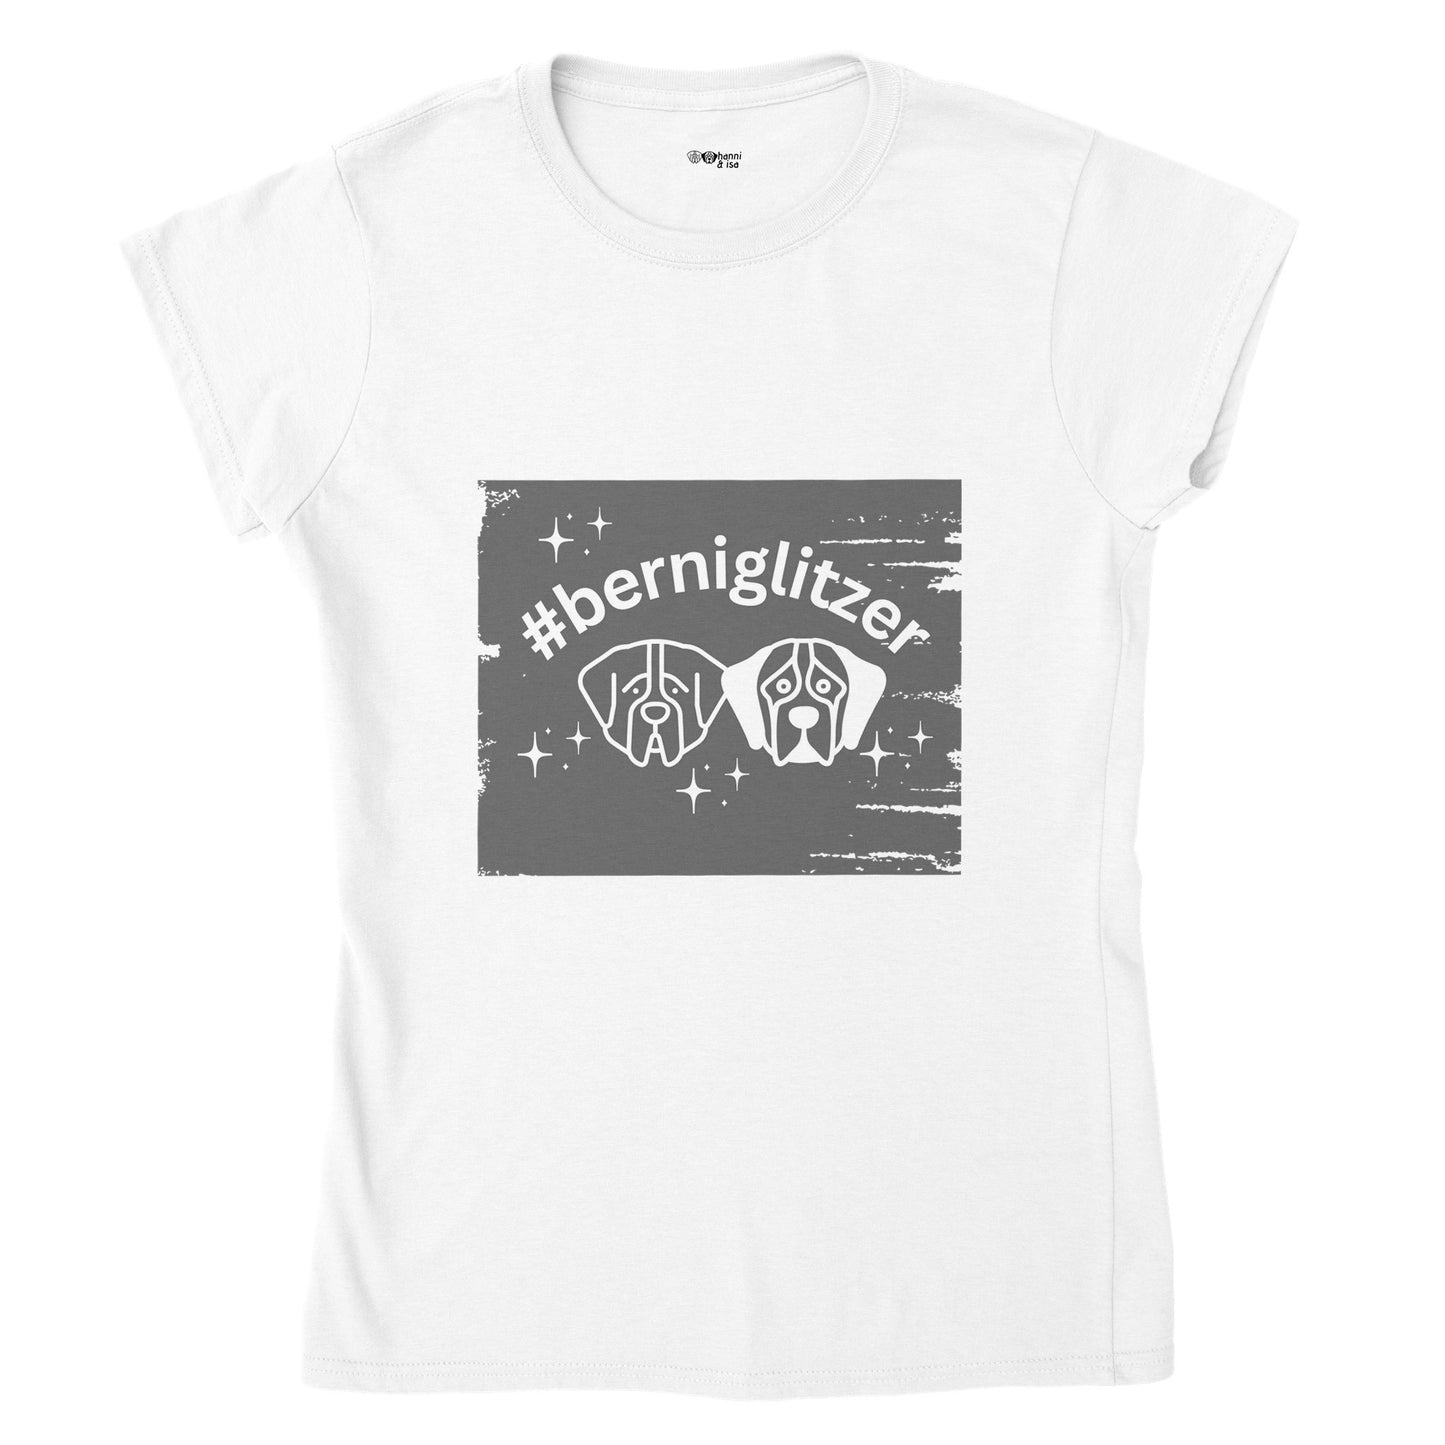 Berniglitzer hanni and isa women's t-shirt